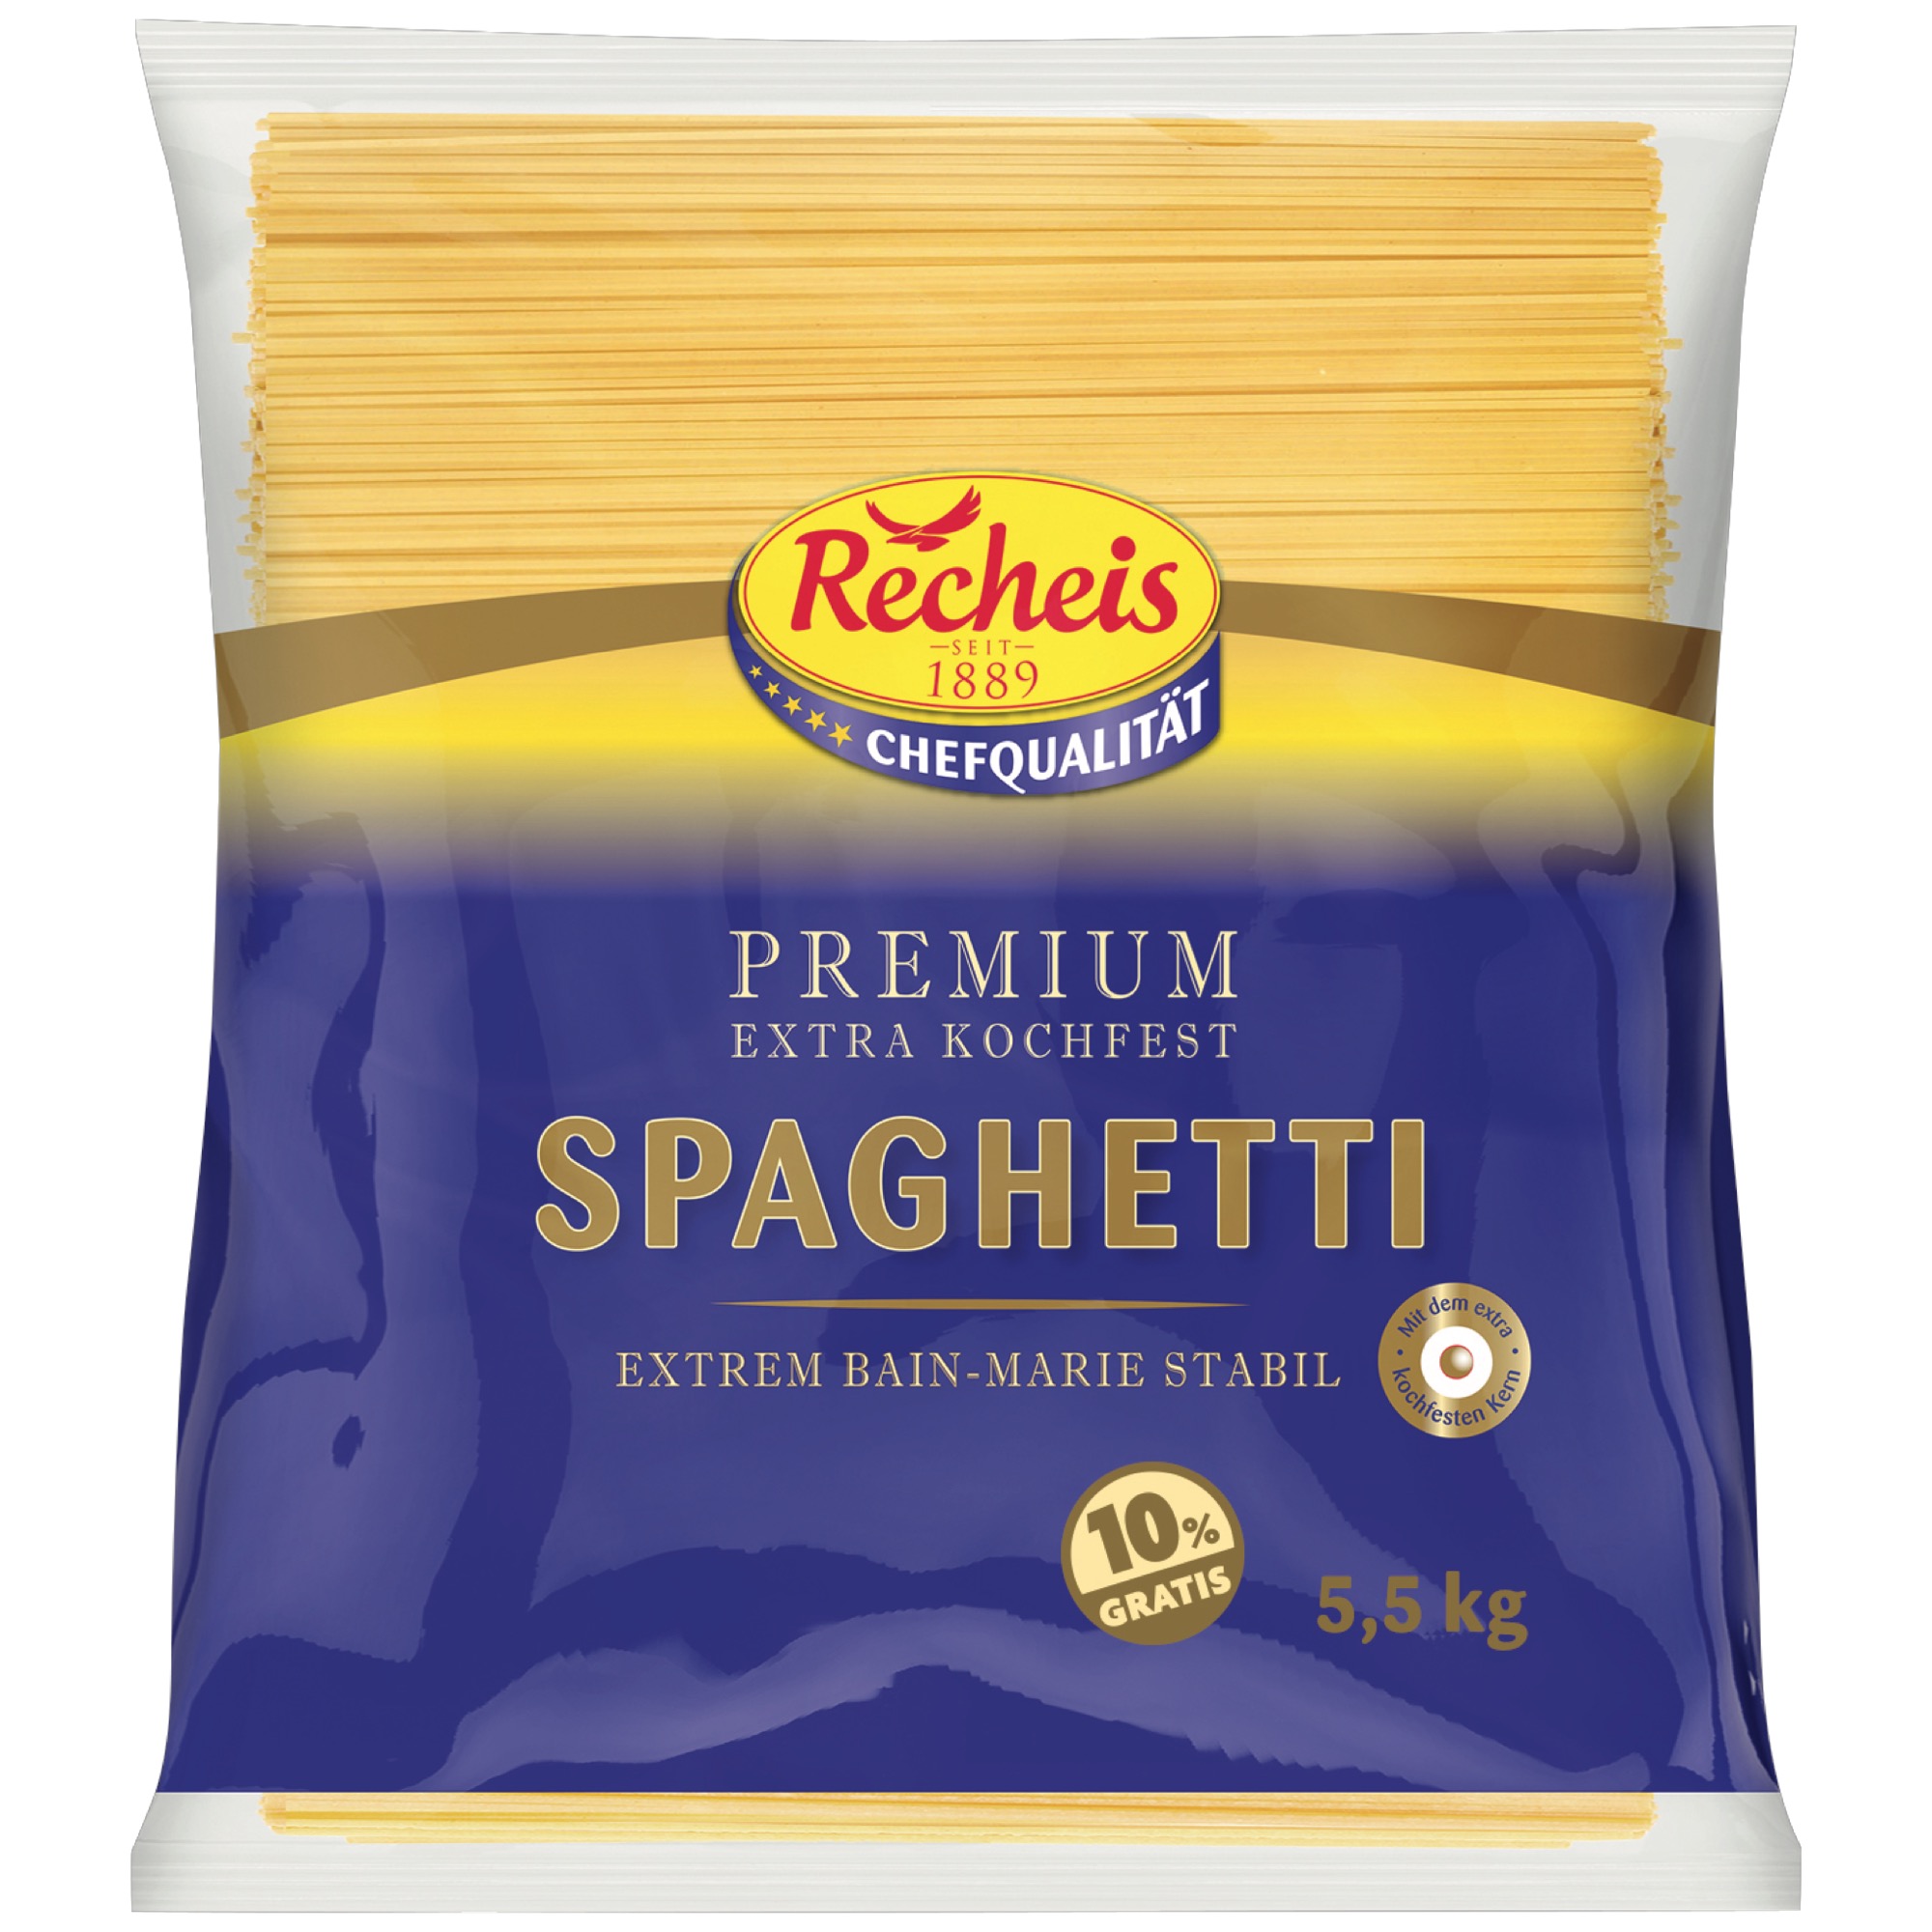 Recheis Prem. Spaghetti kochfest 5kg